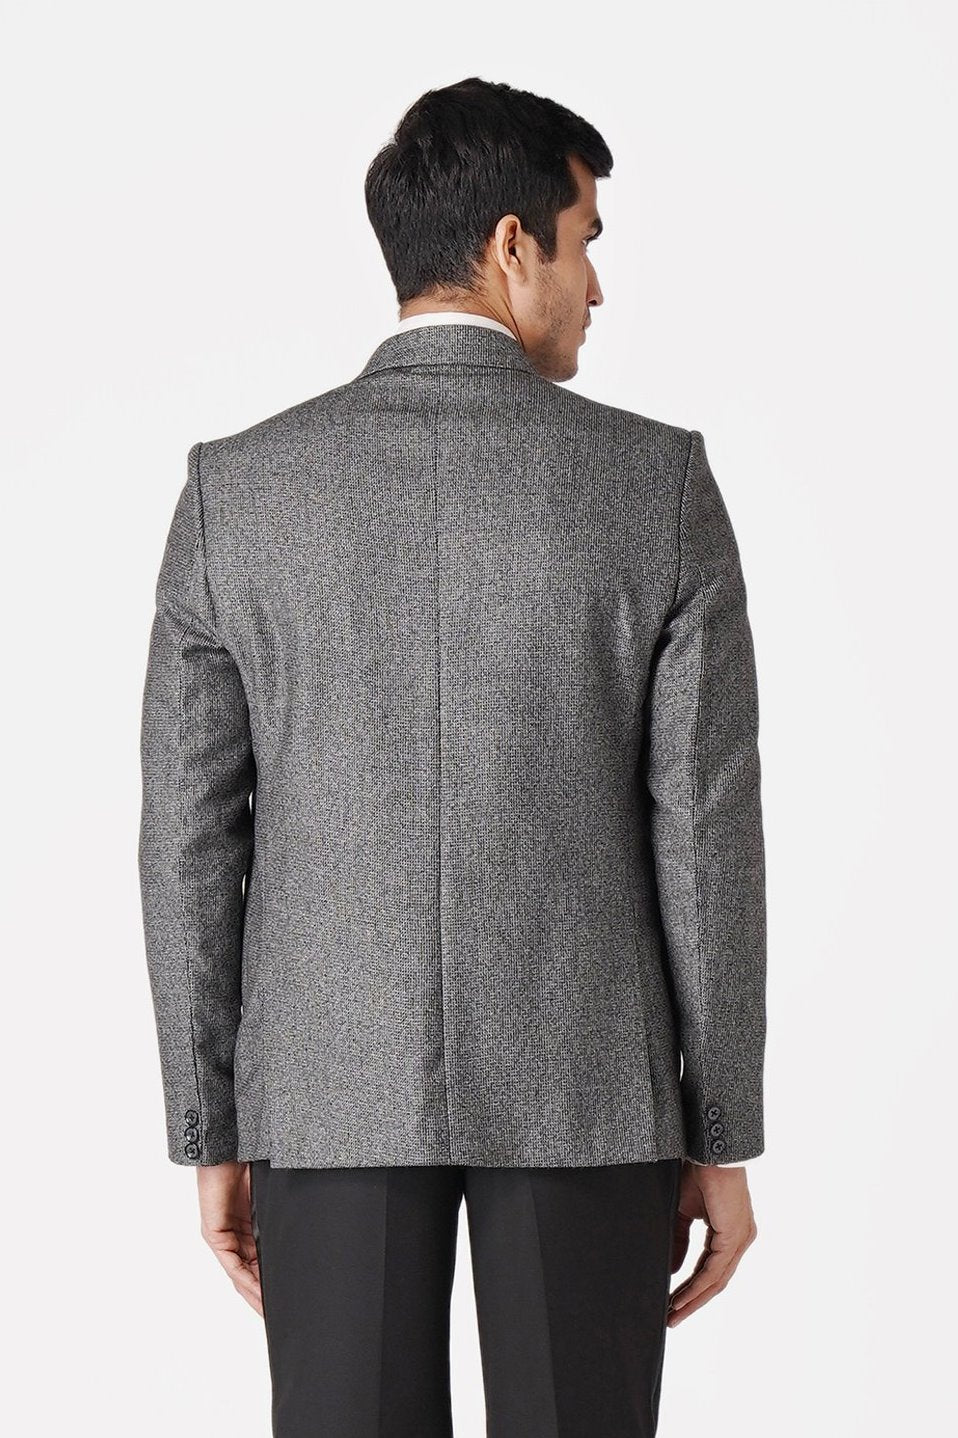 Wintage Men's Tweed Wool and Evening Blazer Coat Jacket : Grey Light Grey / 36 / X-Small